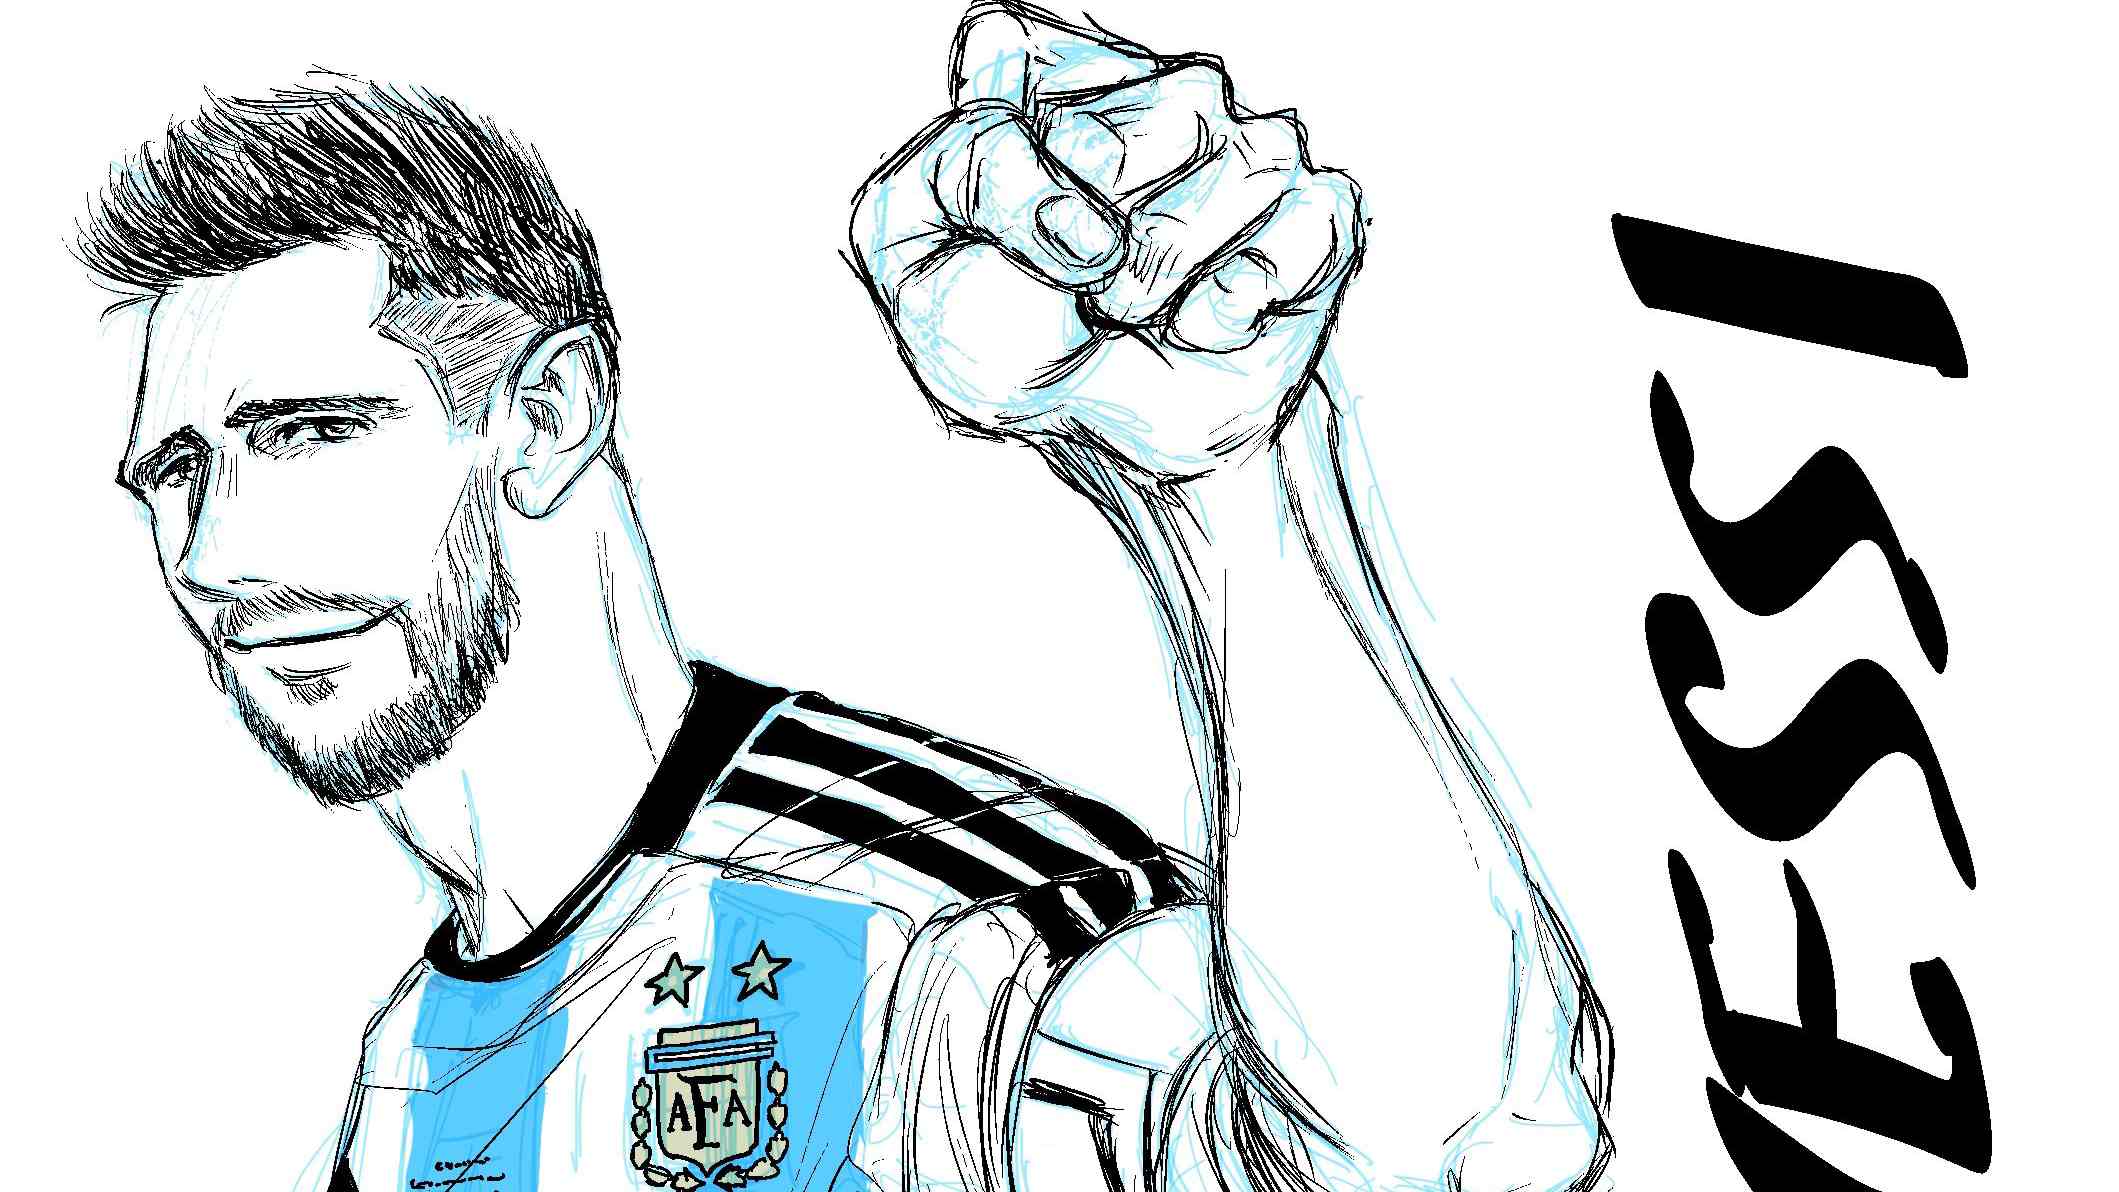 mangaka congratulate Argentina on World Cup win